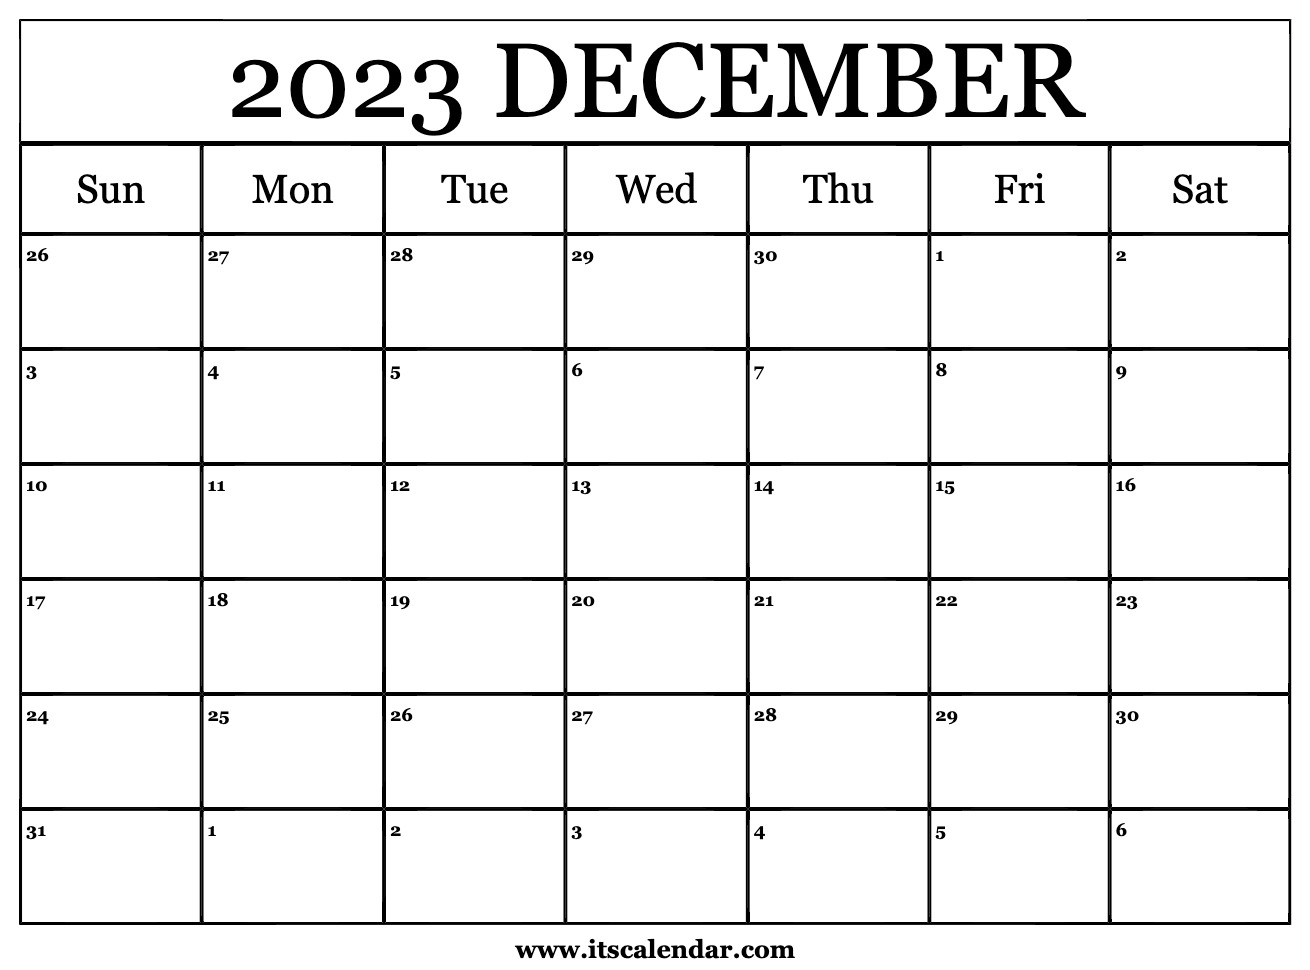 free-printable-december-2023-calendar